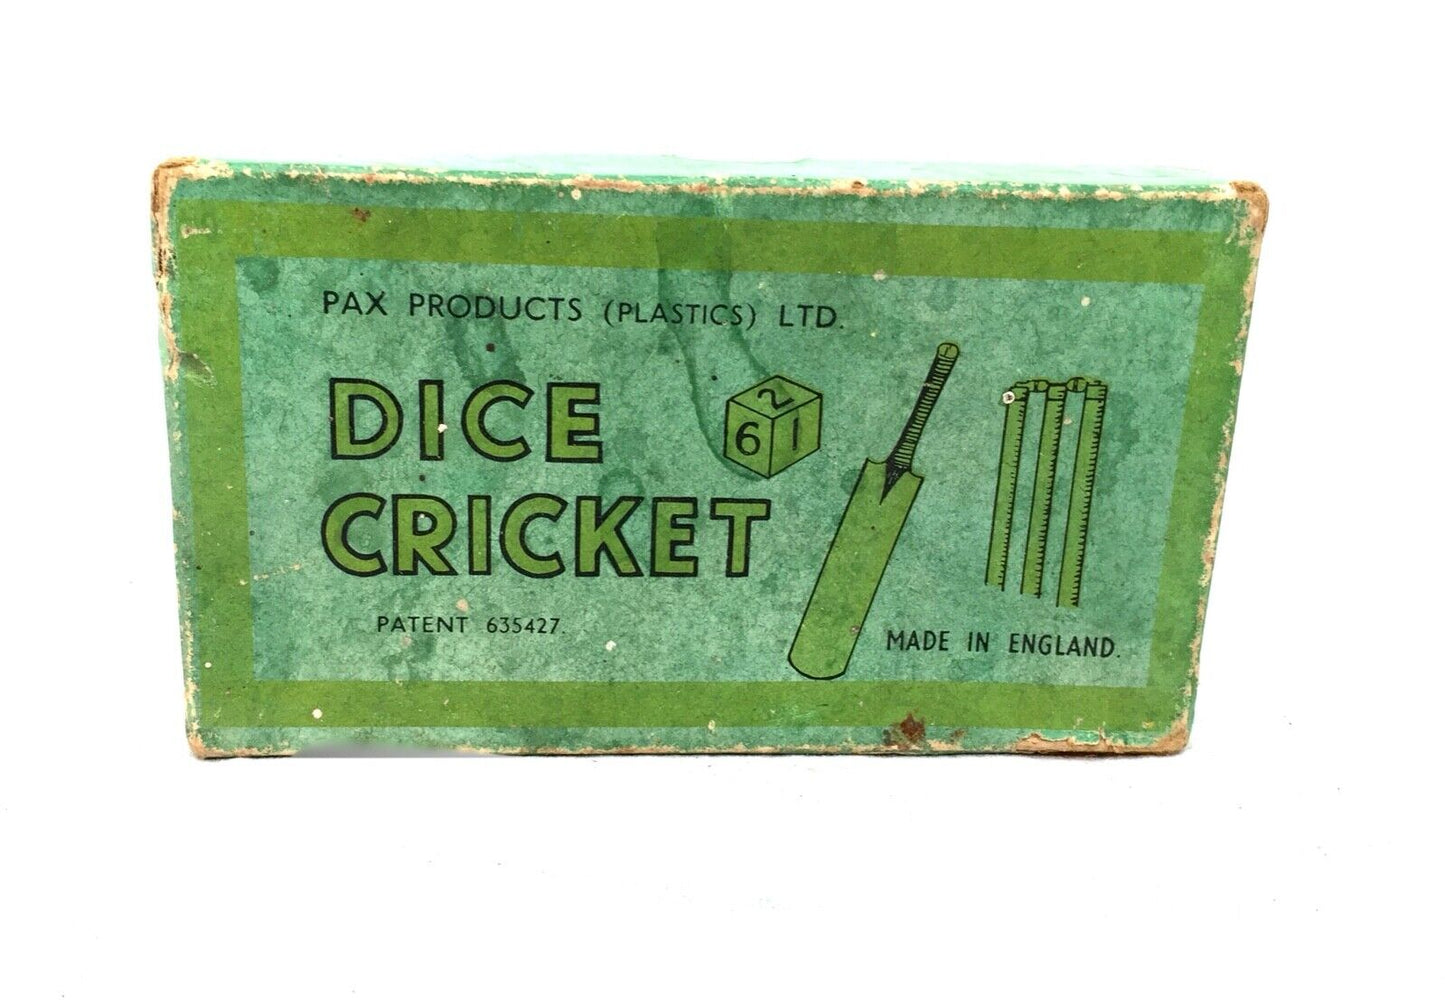 Vintage Tabletop Dice & Cricket Game in Original Box / Board Game / Antique Toy